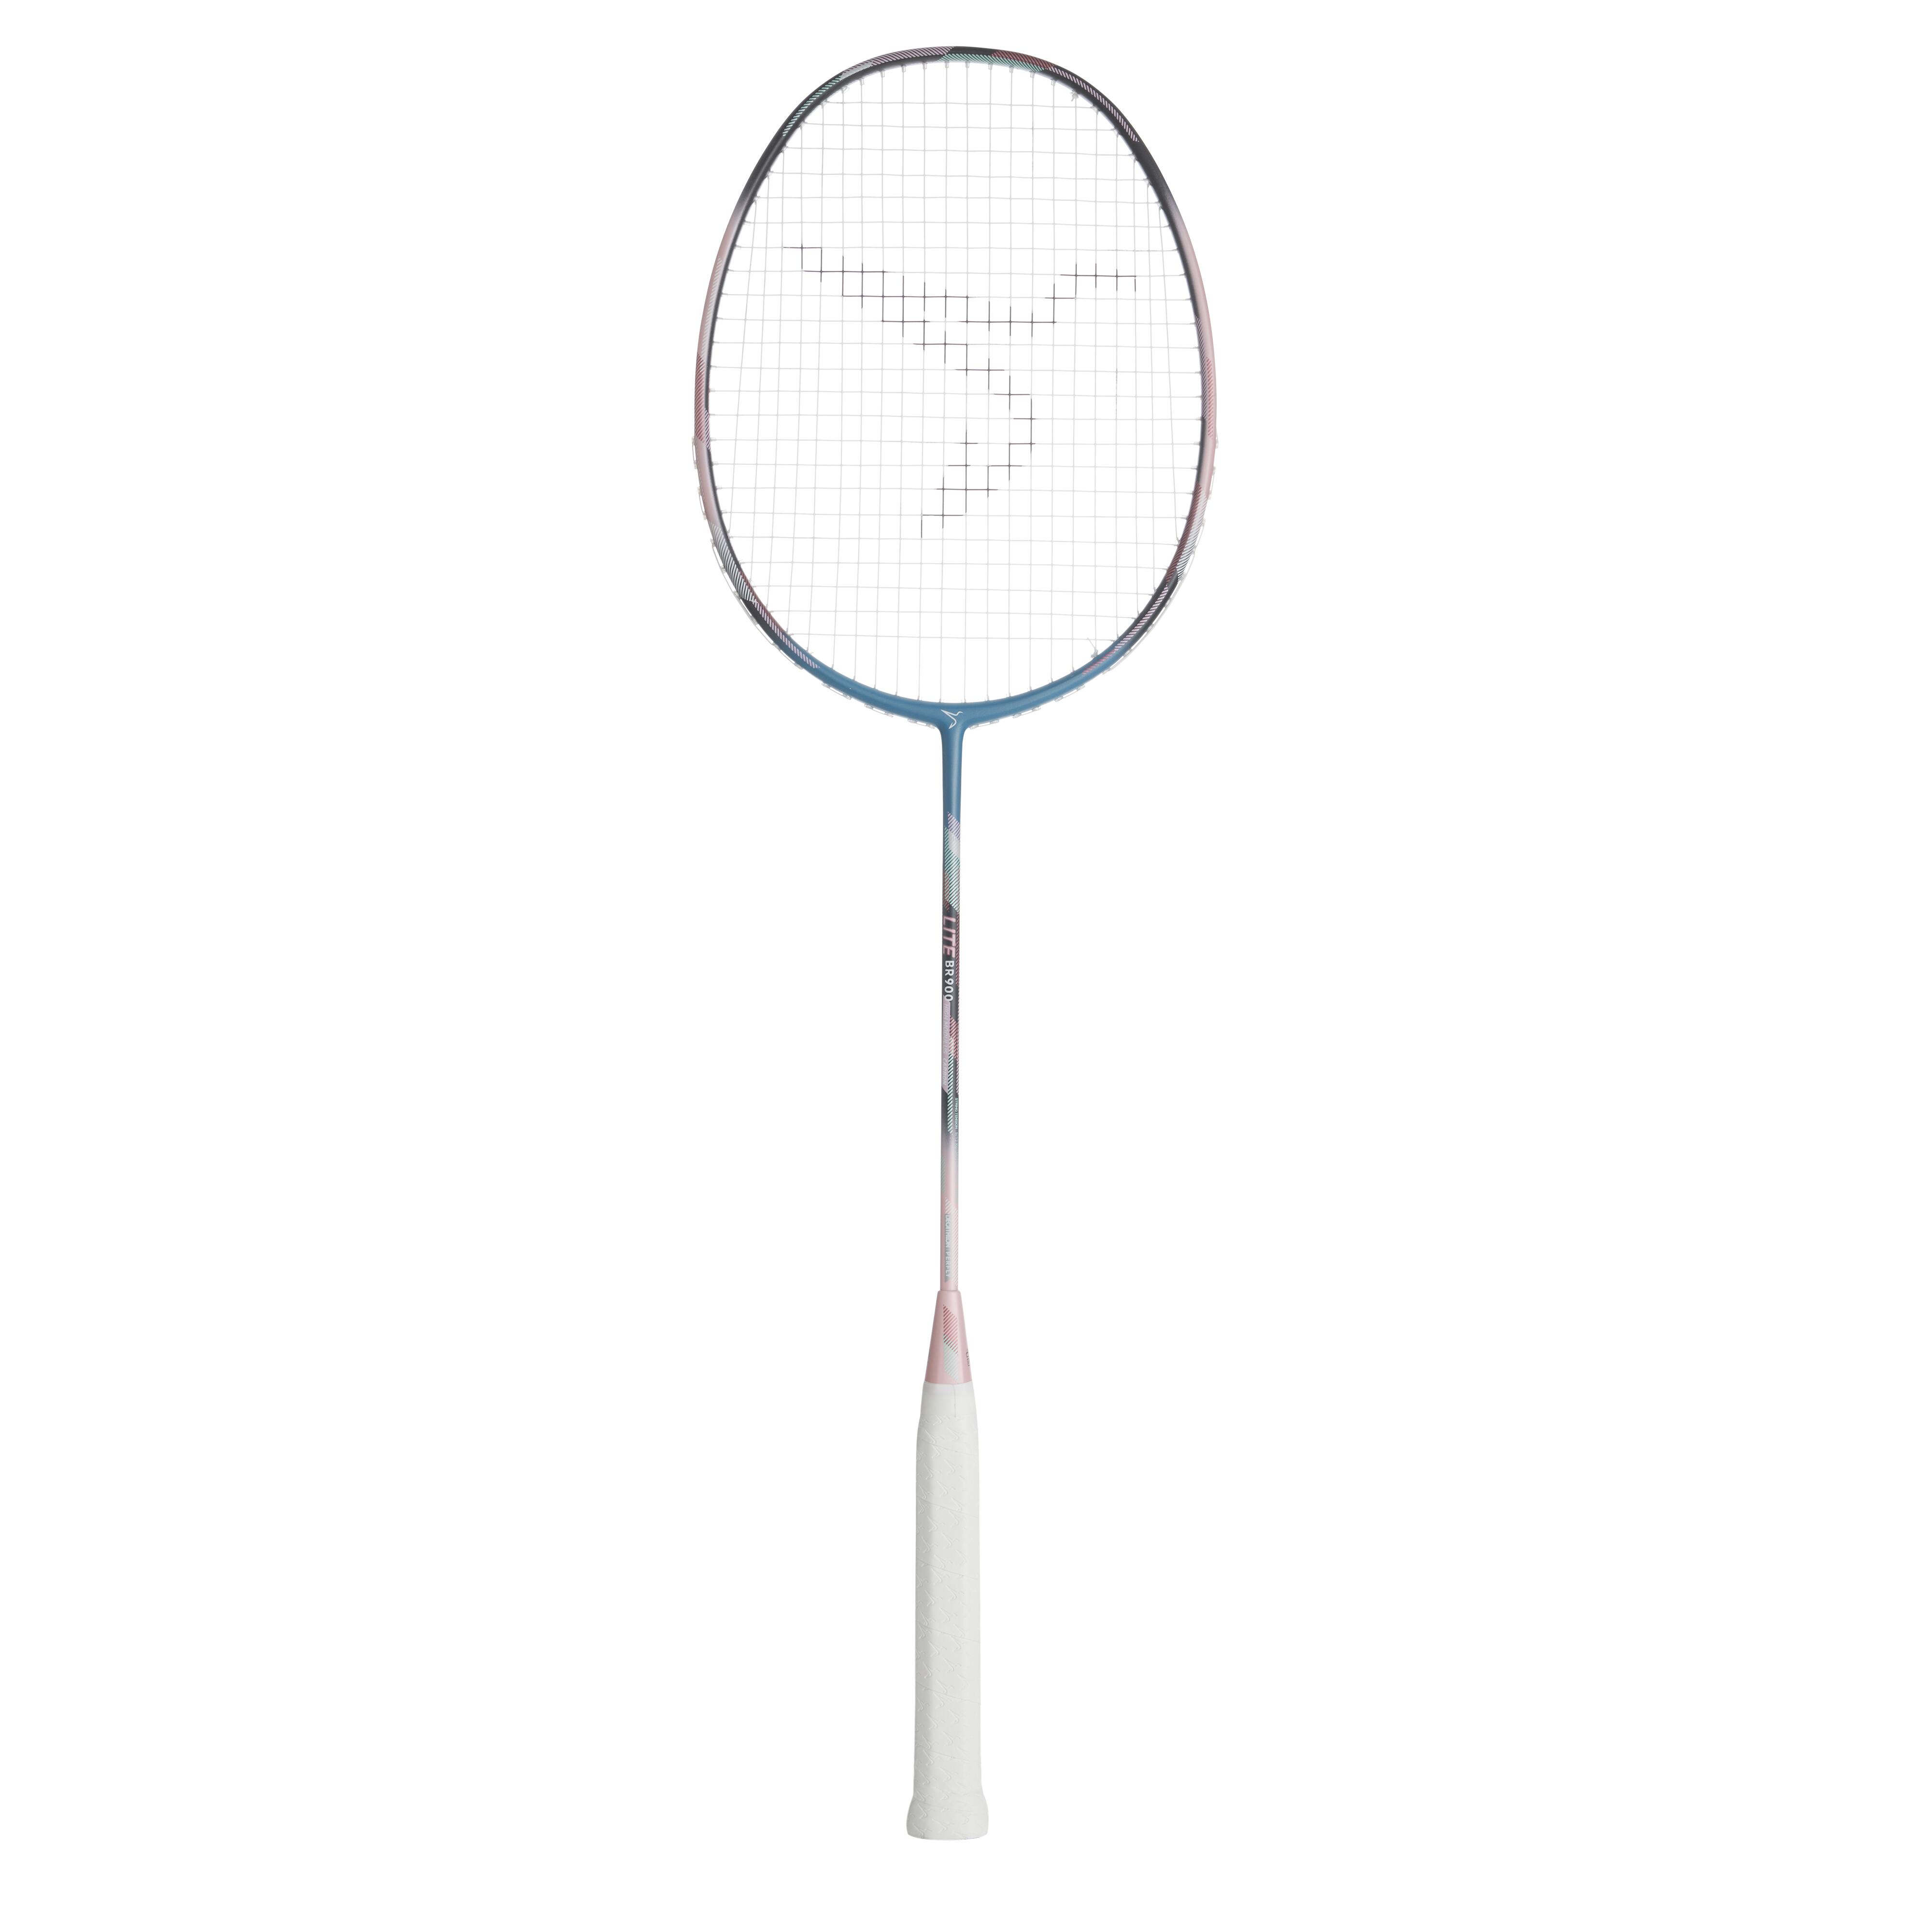 Skipping rope + Badminton shuttlecock / decathlon (perfly) - Sports  Equipment - 1707320175